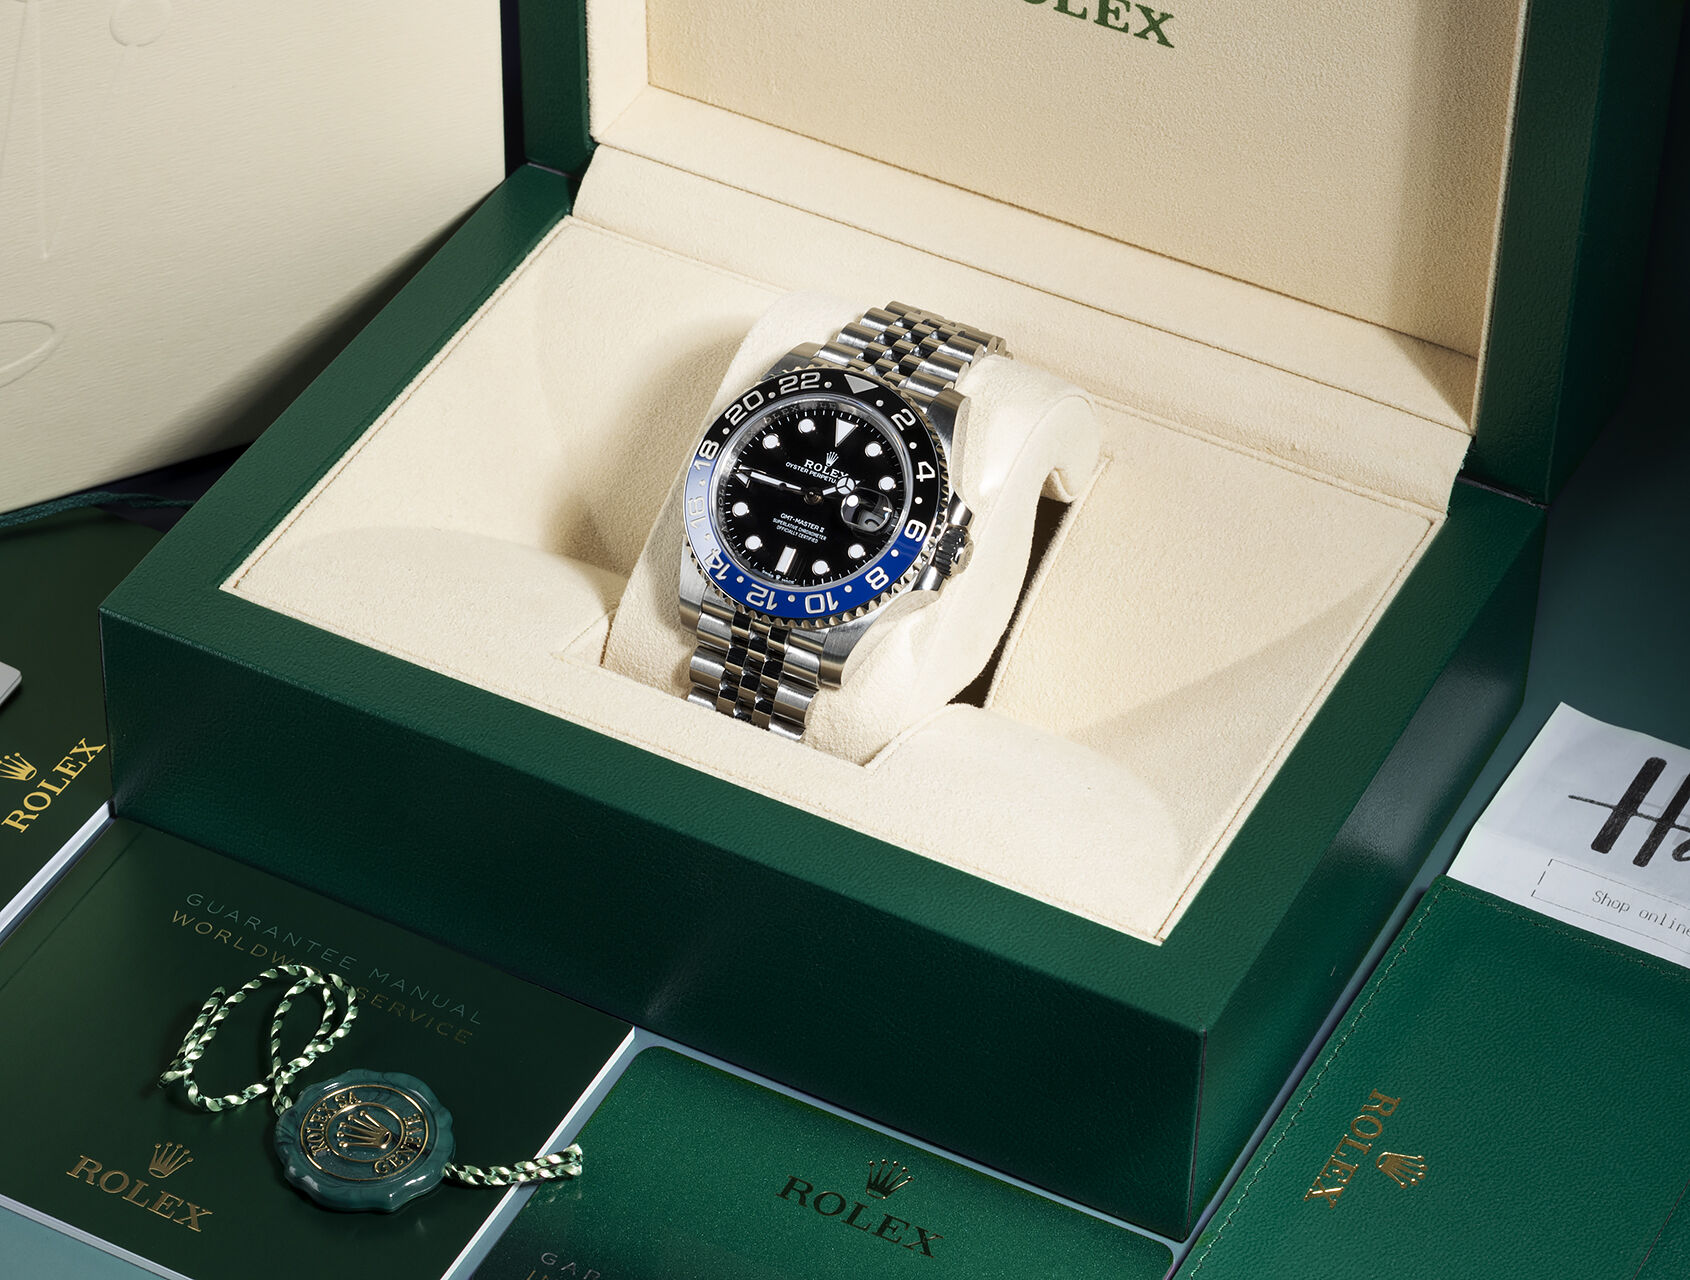 ref 126710BLNR | 126710BLNR - Box & Certificate | Rolex GMT-Master II